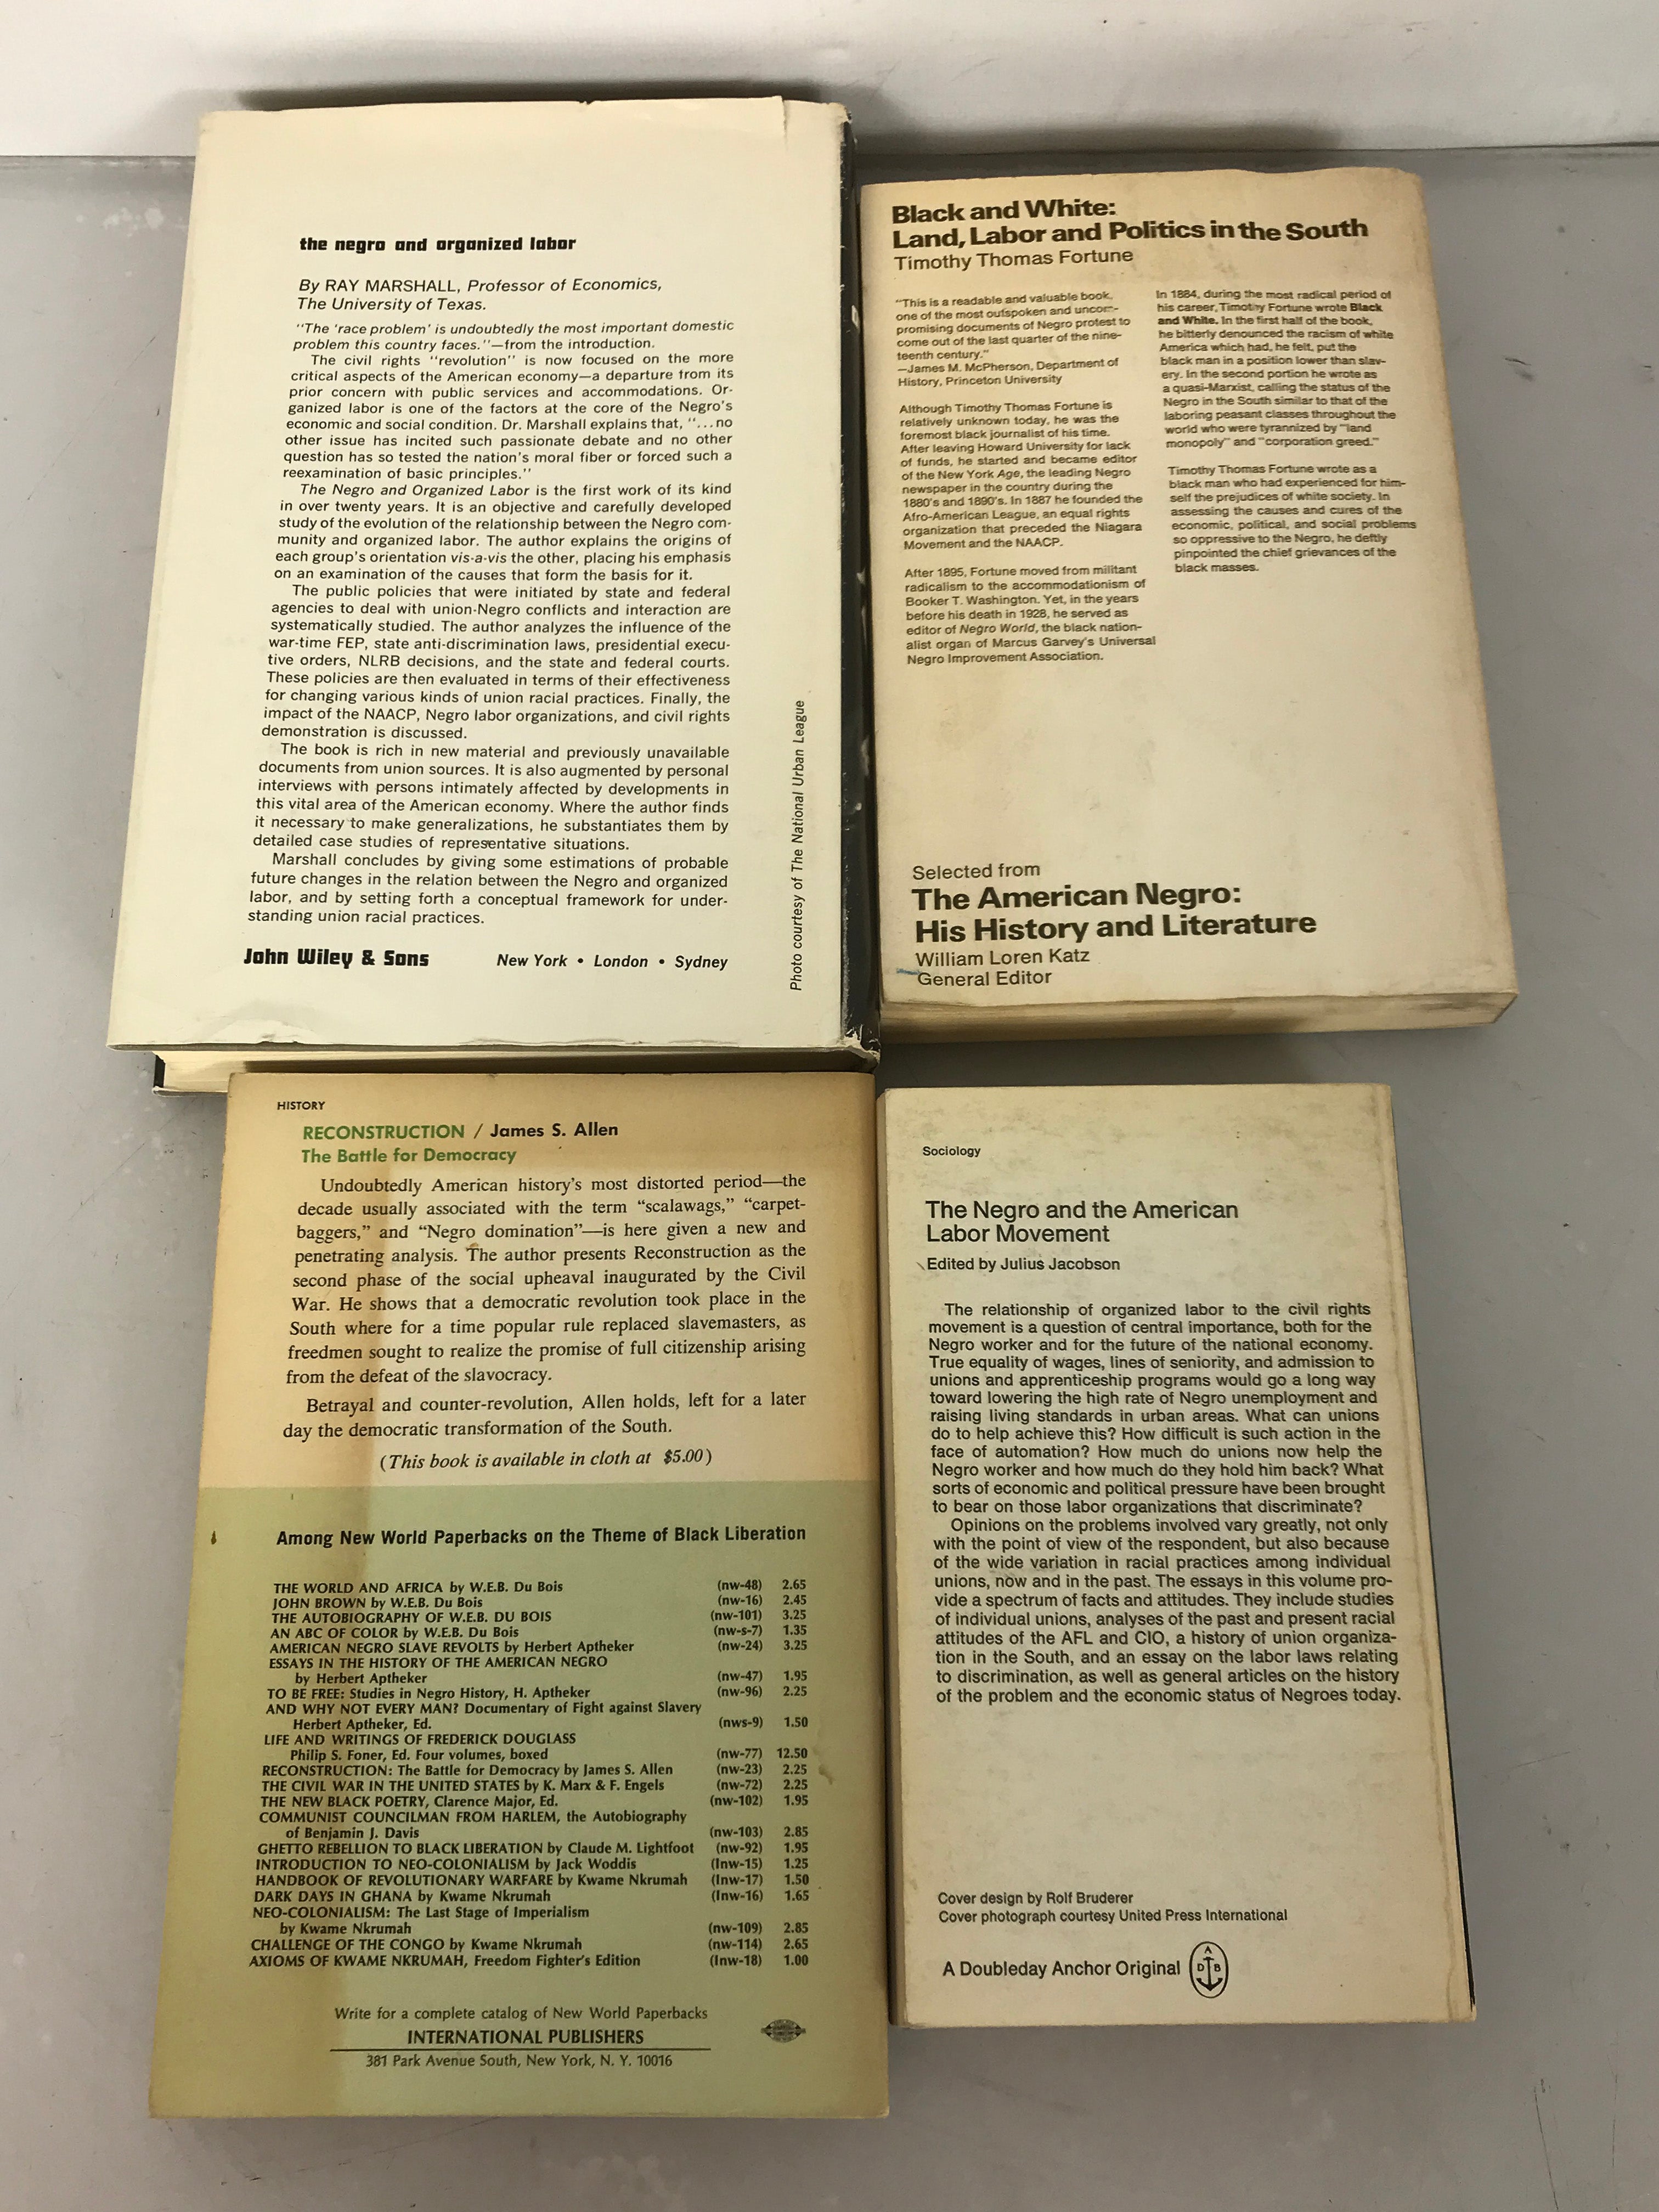 Lot of 4 African American History Books 1965-1970 HC DJ SC